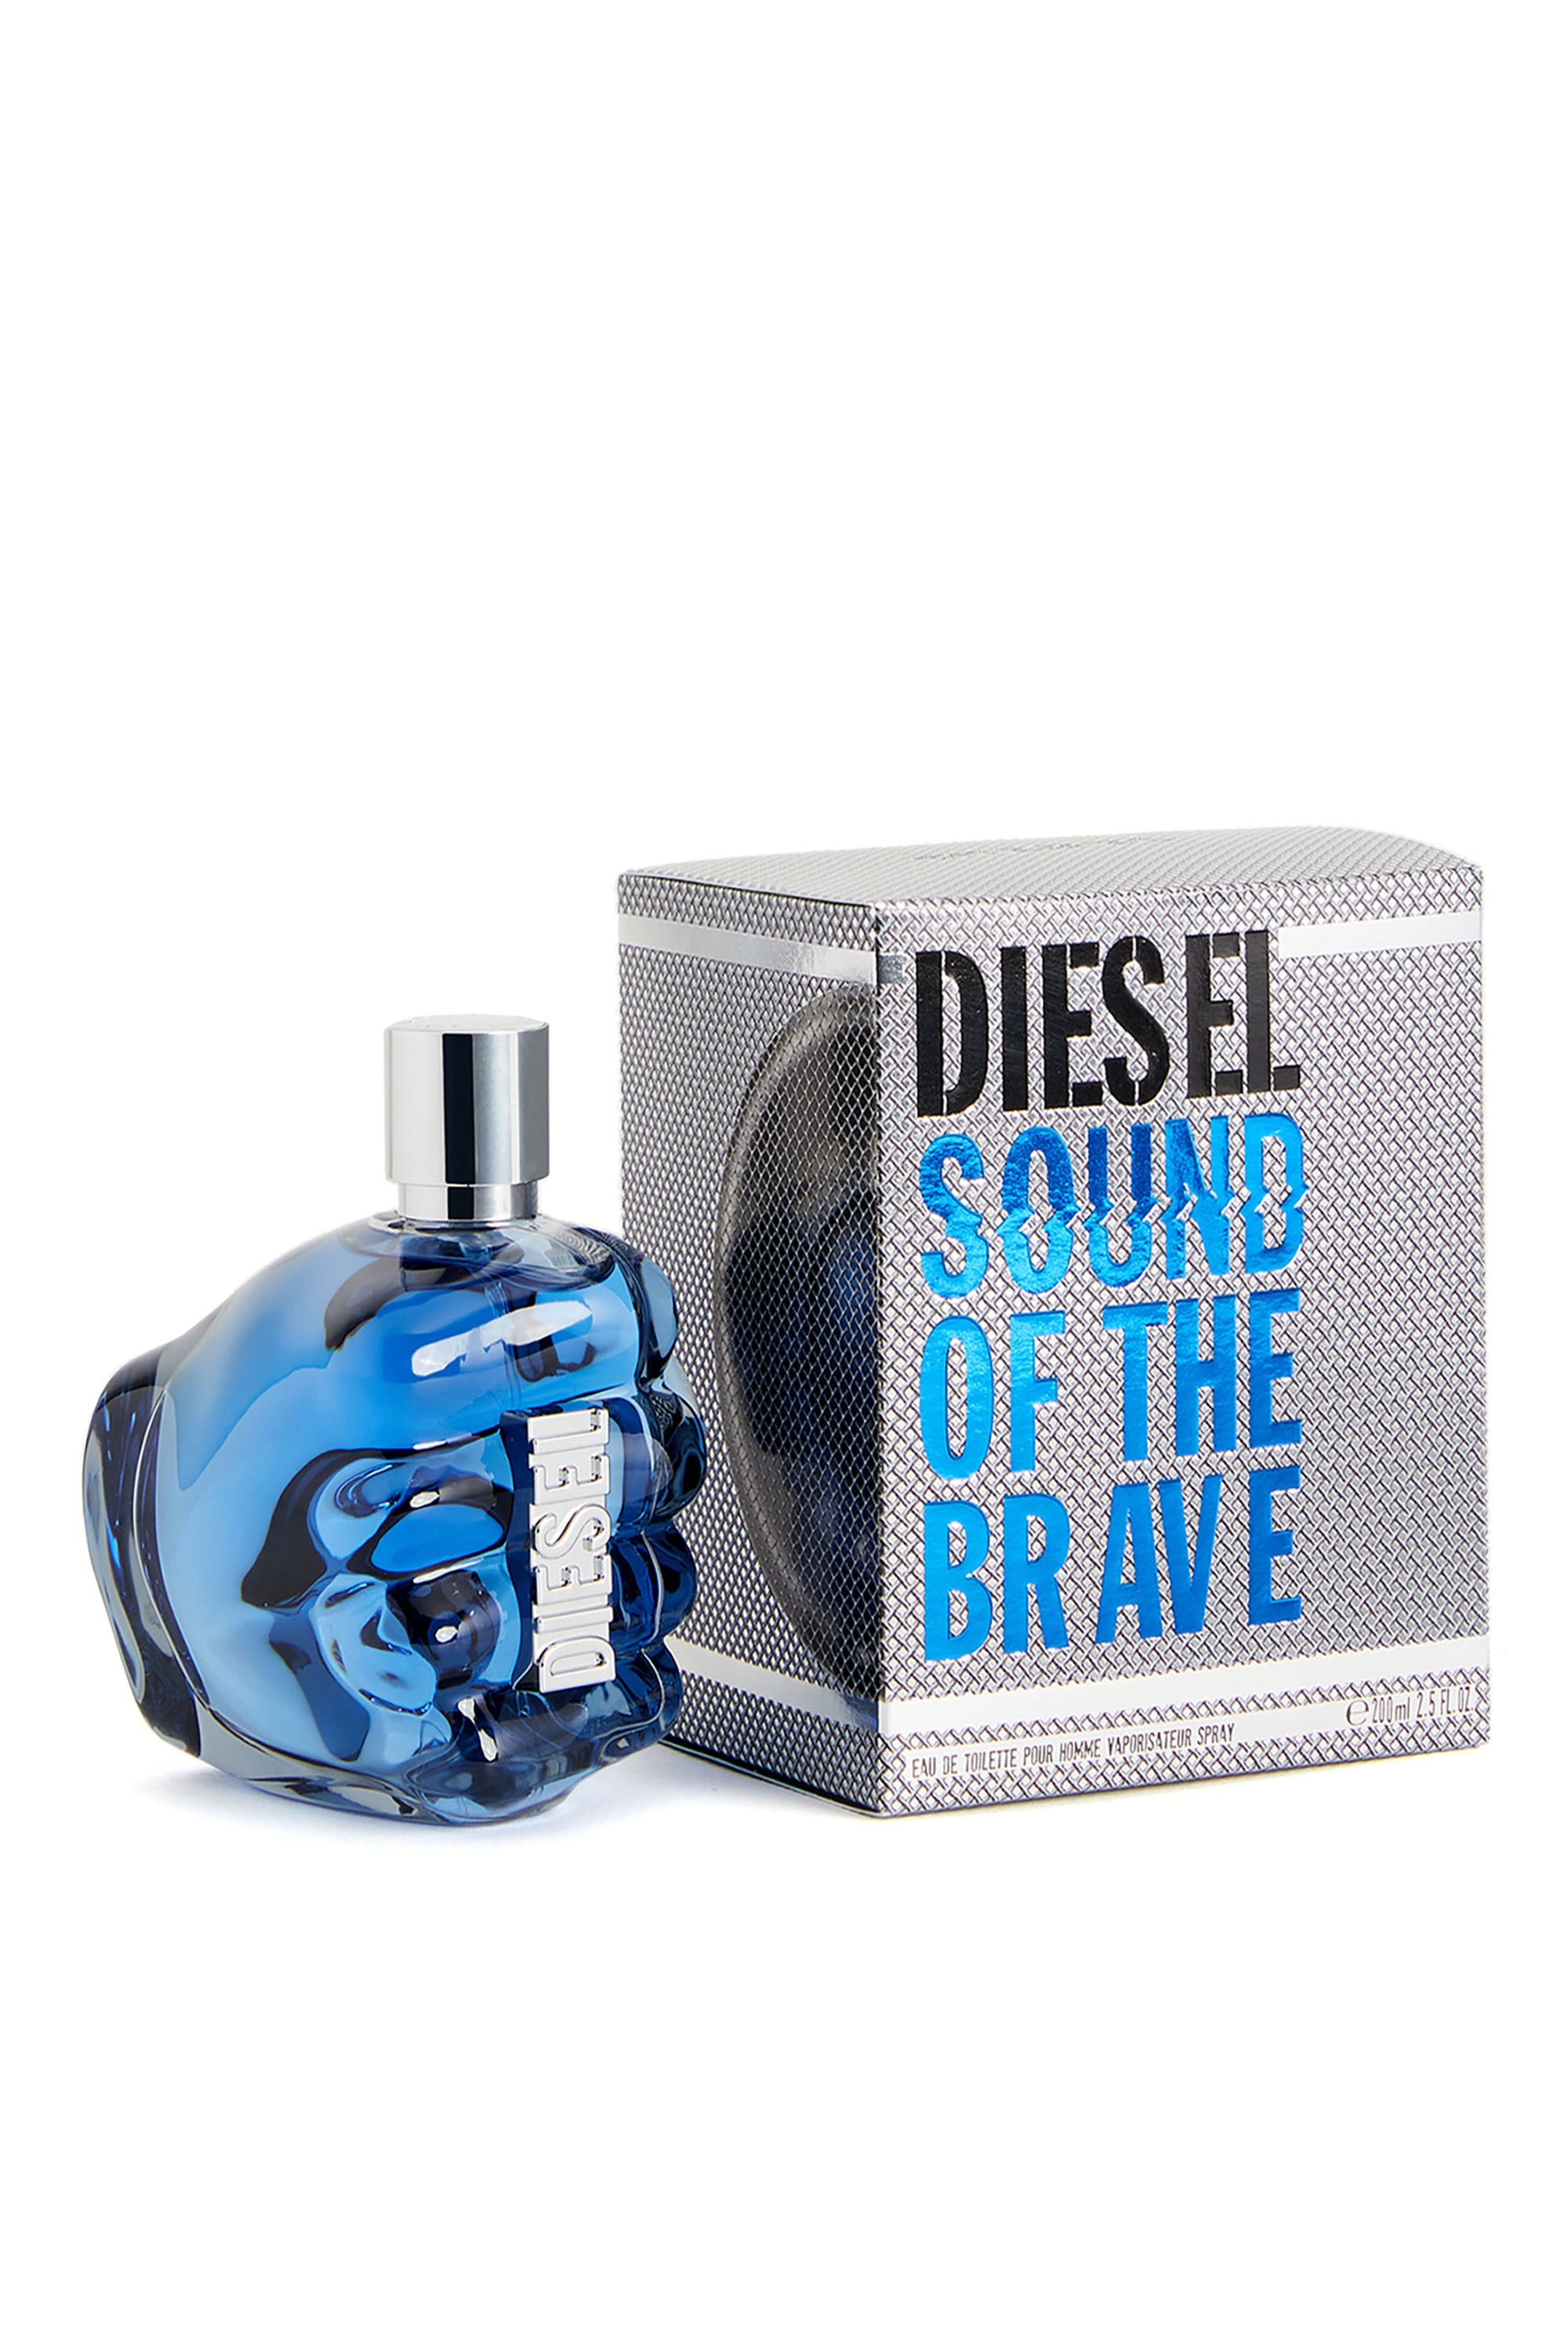 Diesel - SOUND OF THE BRAVE 200ML, Bleu - Image 3